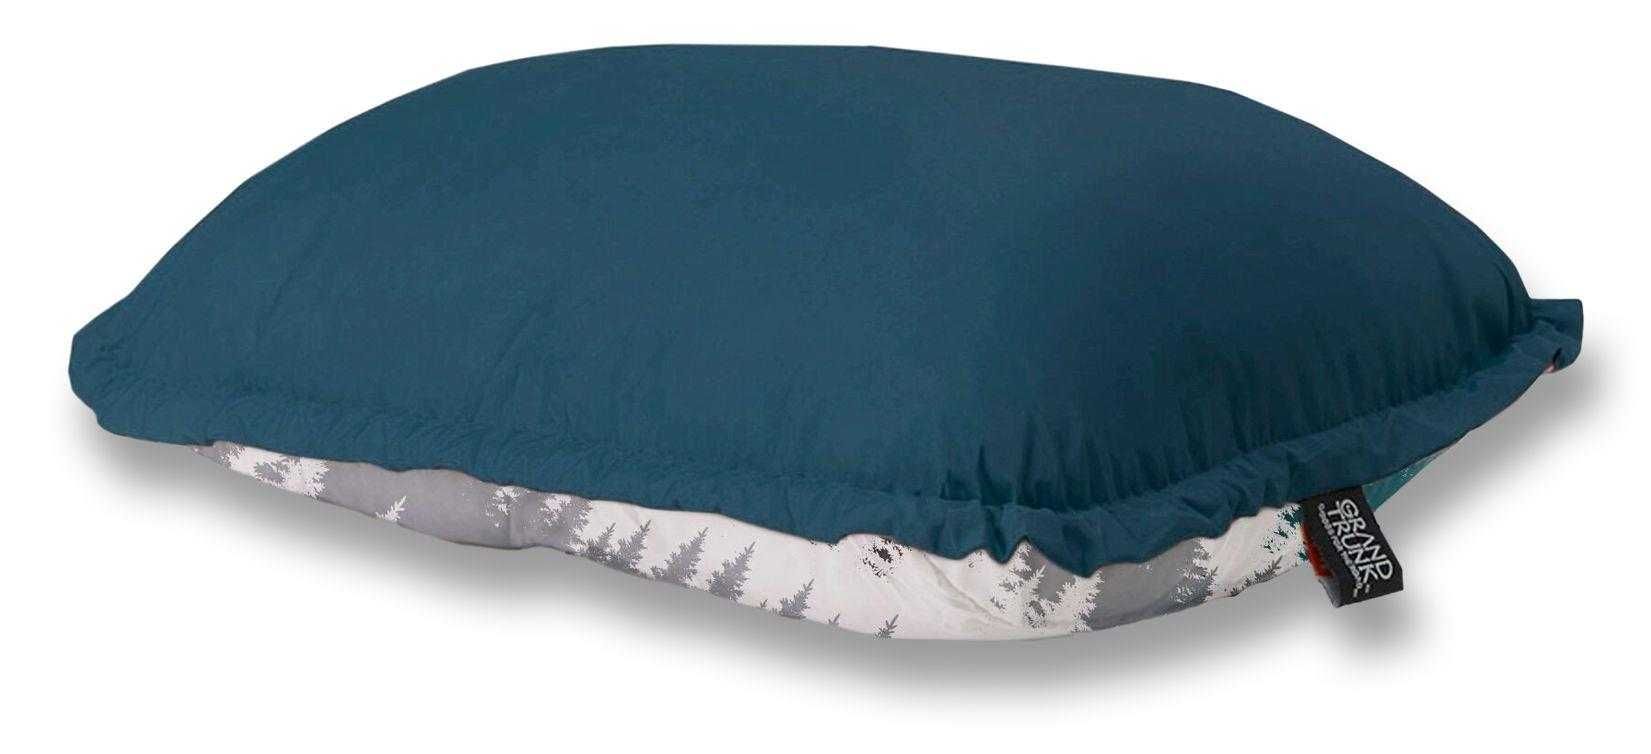 Poduszka Grand Trunk - Puffy Adjustable Travel Pillow (Peacock Green)